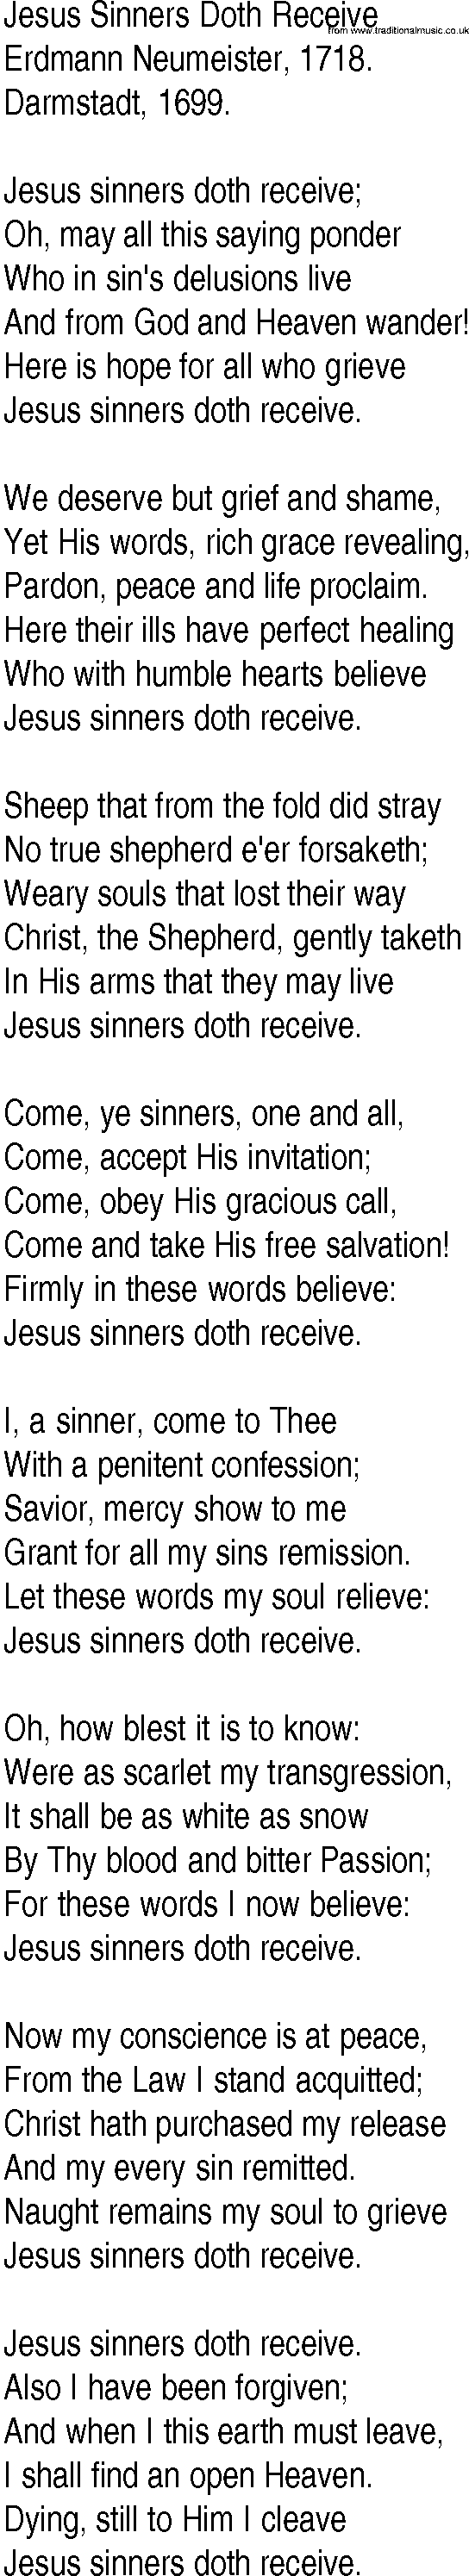 Hymn and Gospel Song: Jesus Sinners Doth Receive by Erdmann Neumeister lyrics